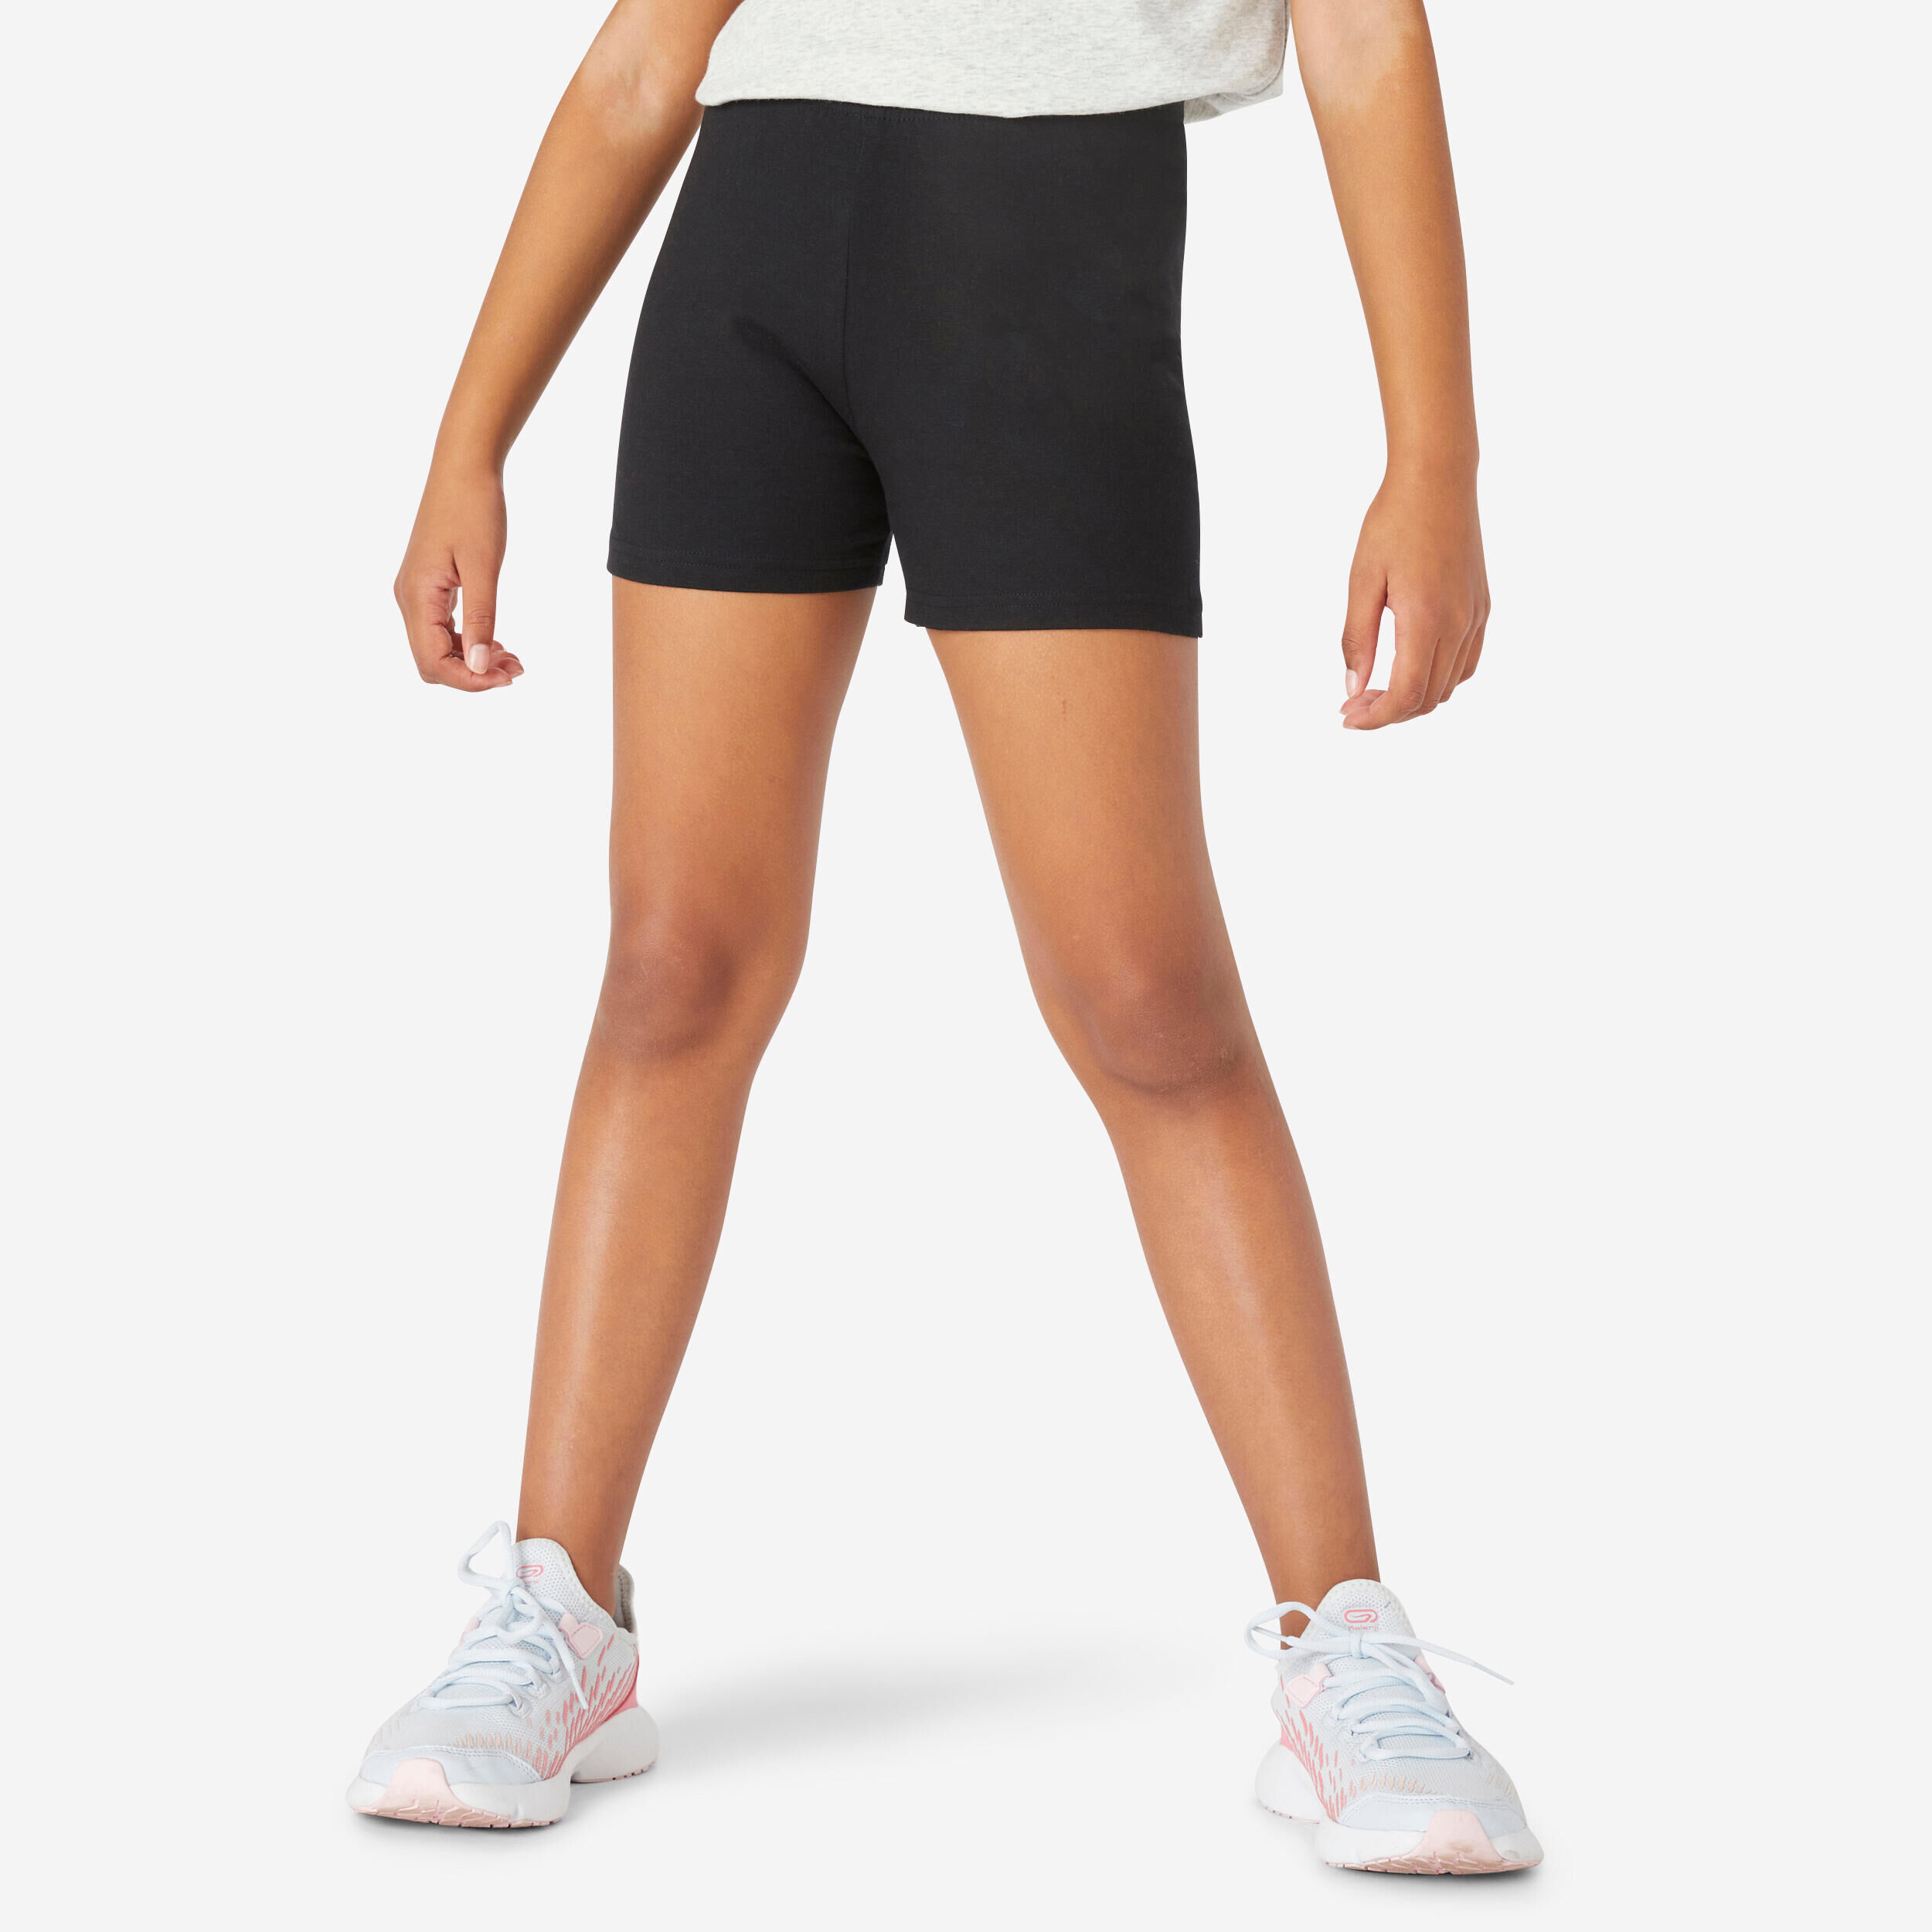 DOMYOS Girls' Basic Cotton Shorts - Black